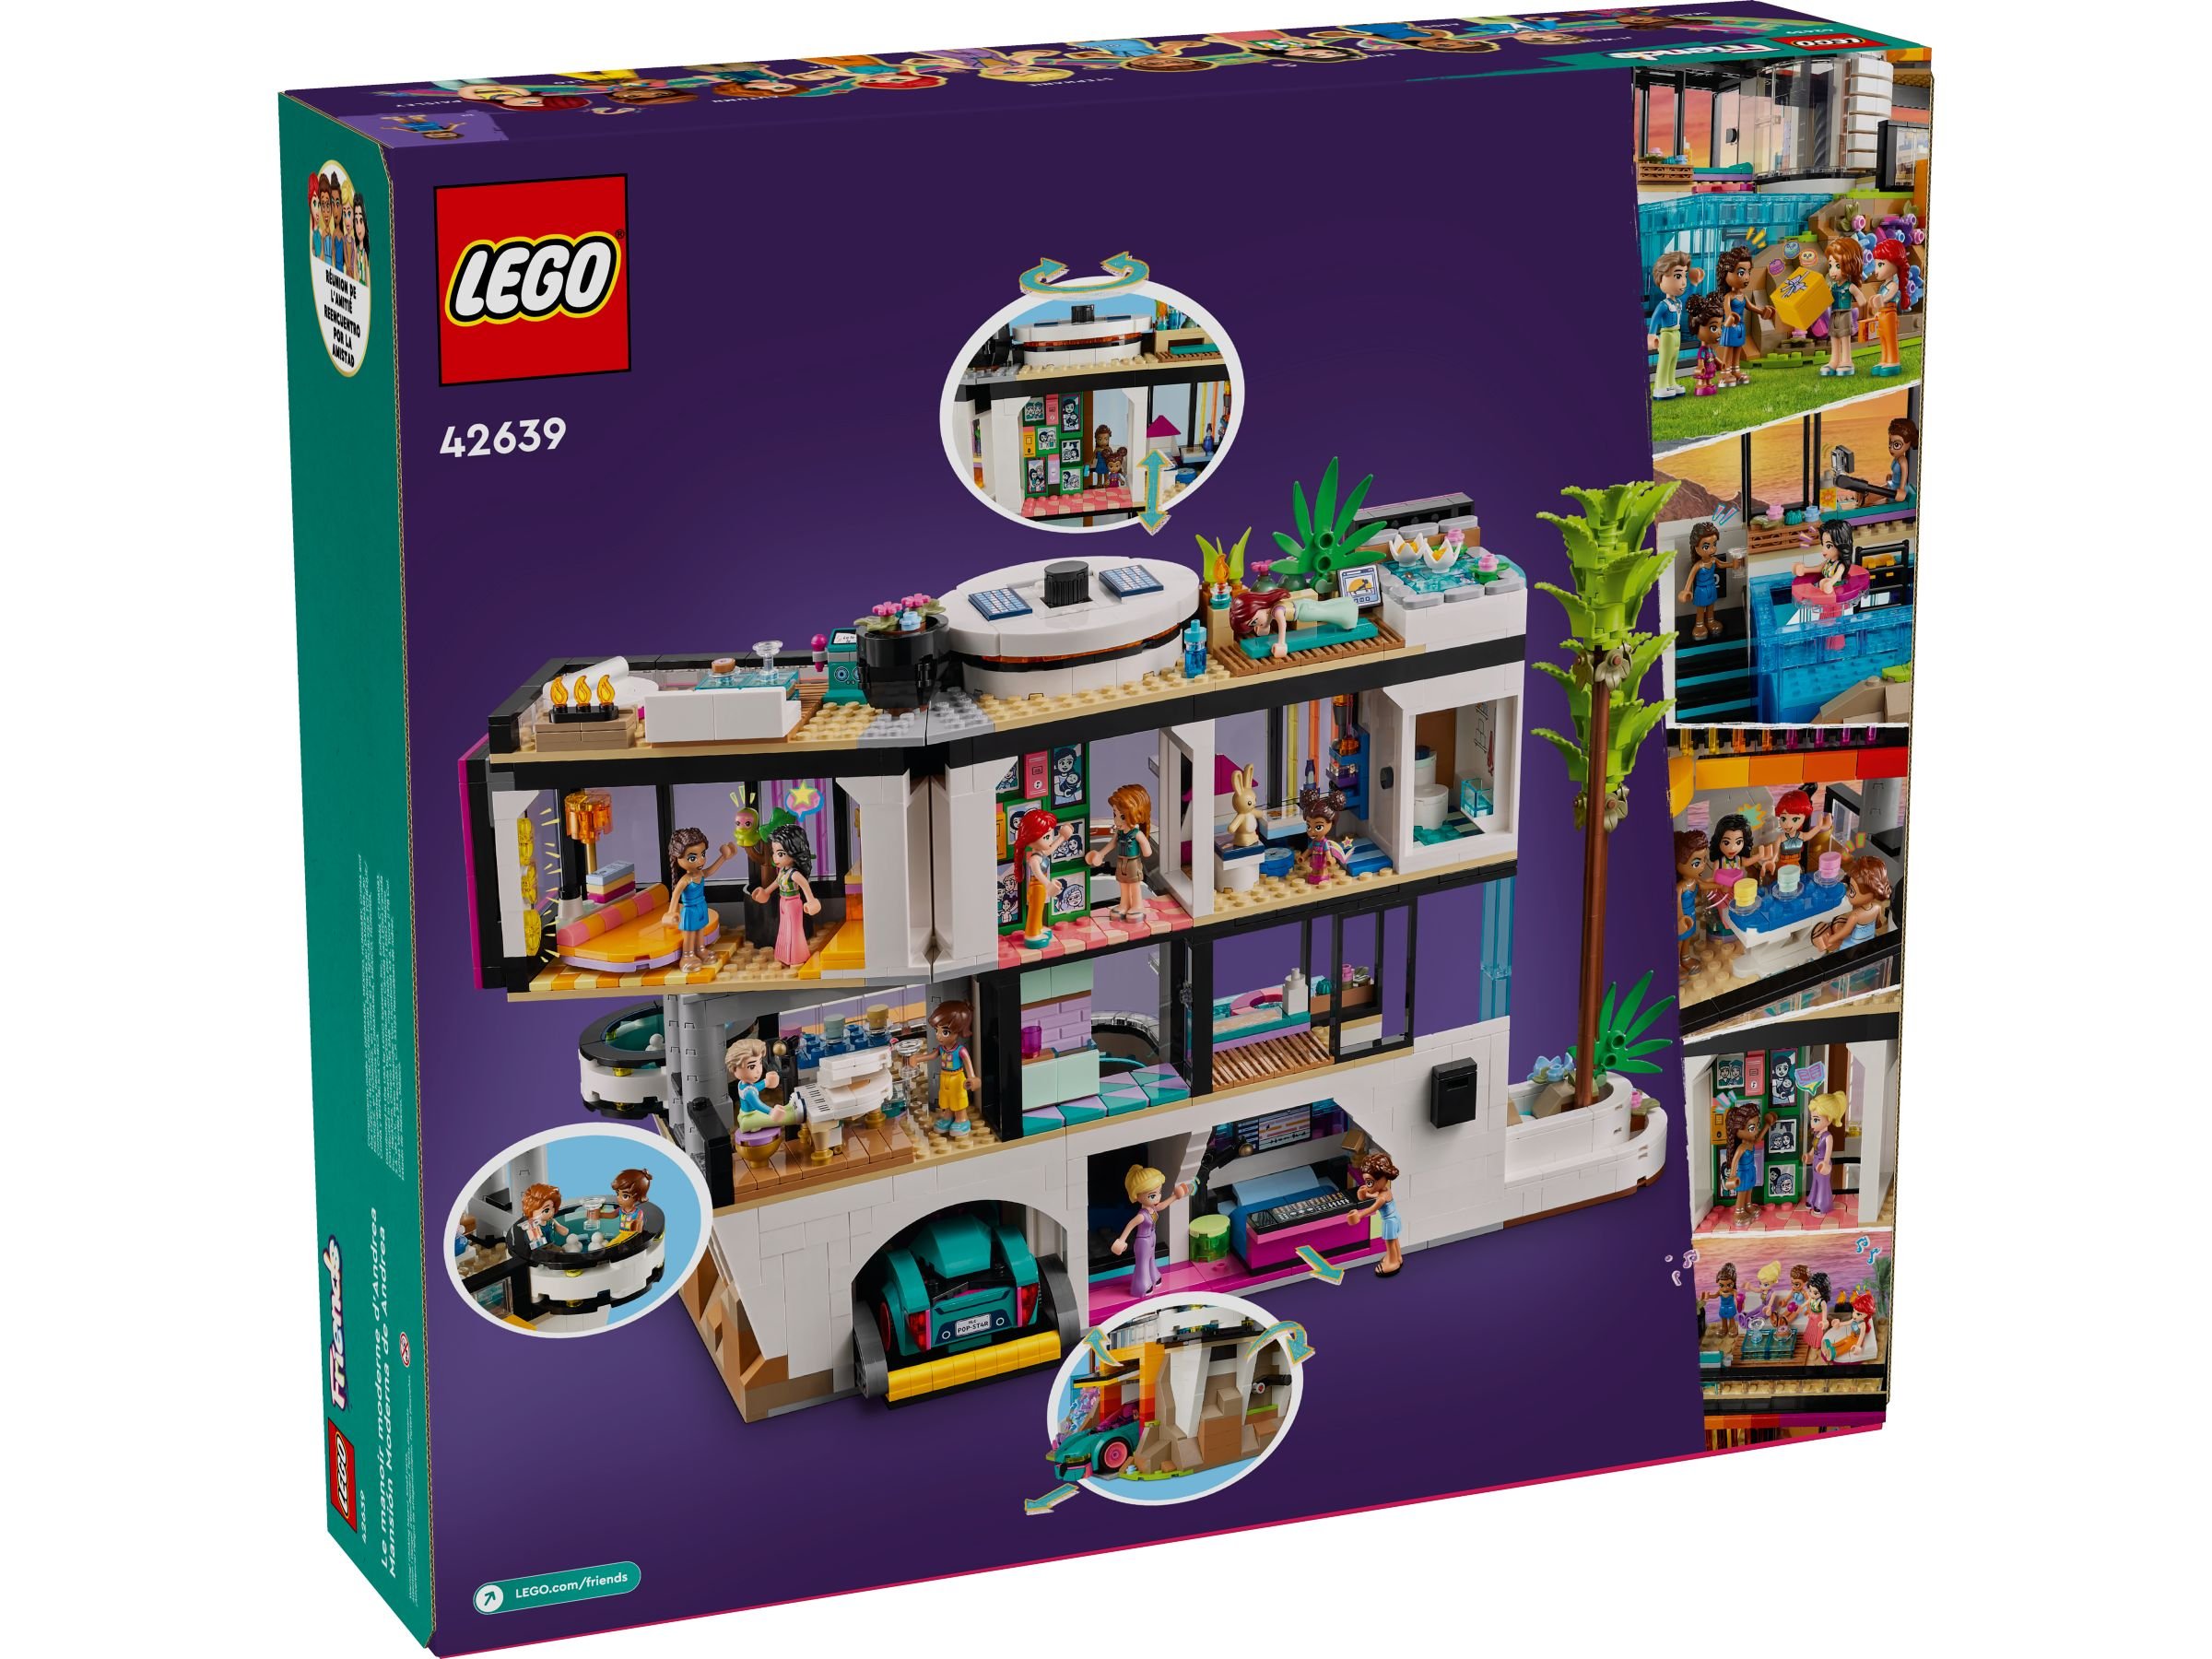 LEGO Friends 42639 Andreas moderne Villa LEGO_42639_alt2.jpg